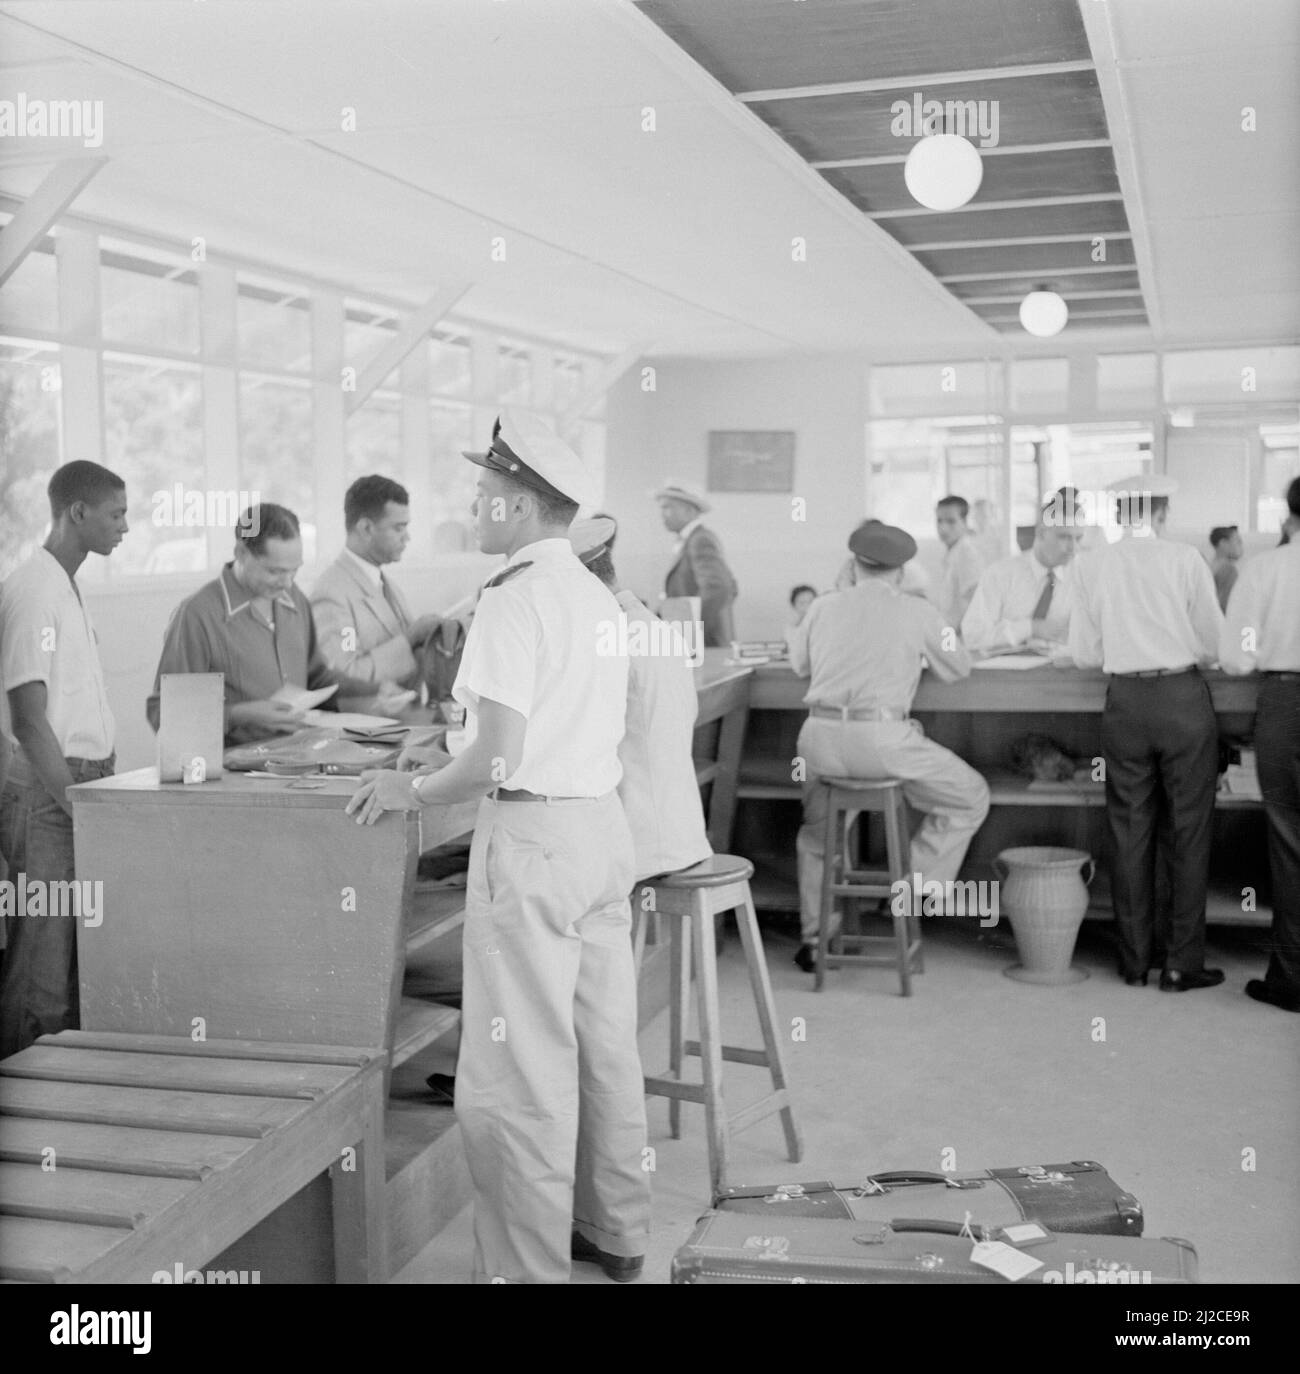 Customs at Zanderij airport in Suriname around October 1, 1955 Stock Photo